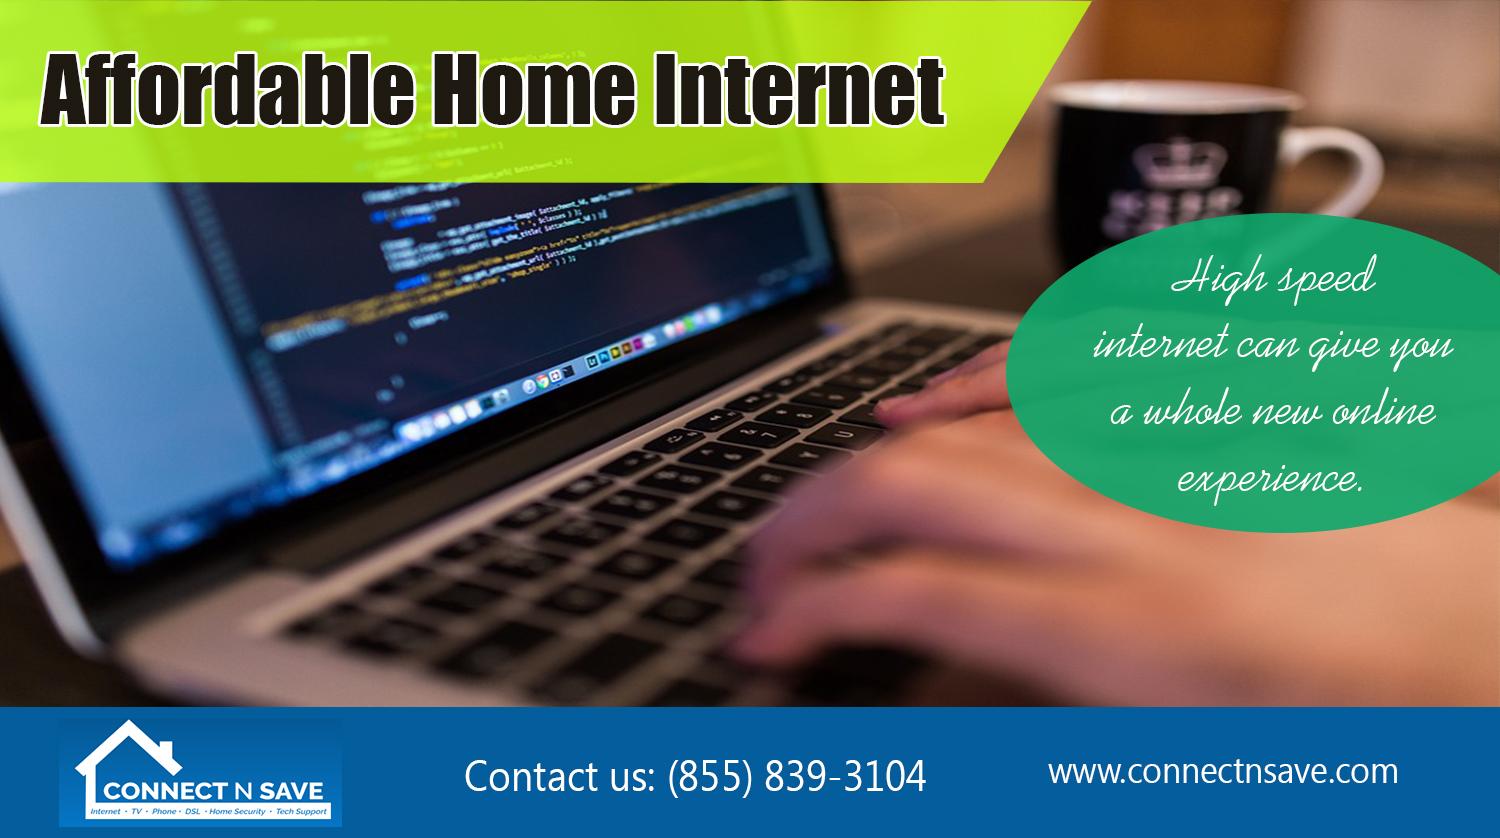 Affordable Home Internet | http://connectnsave.com/